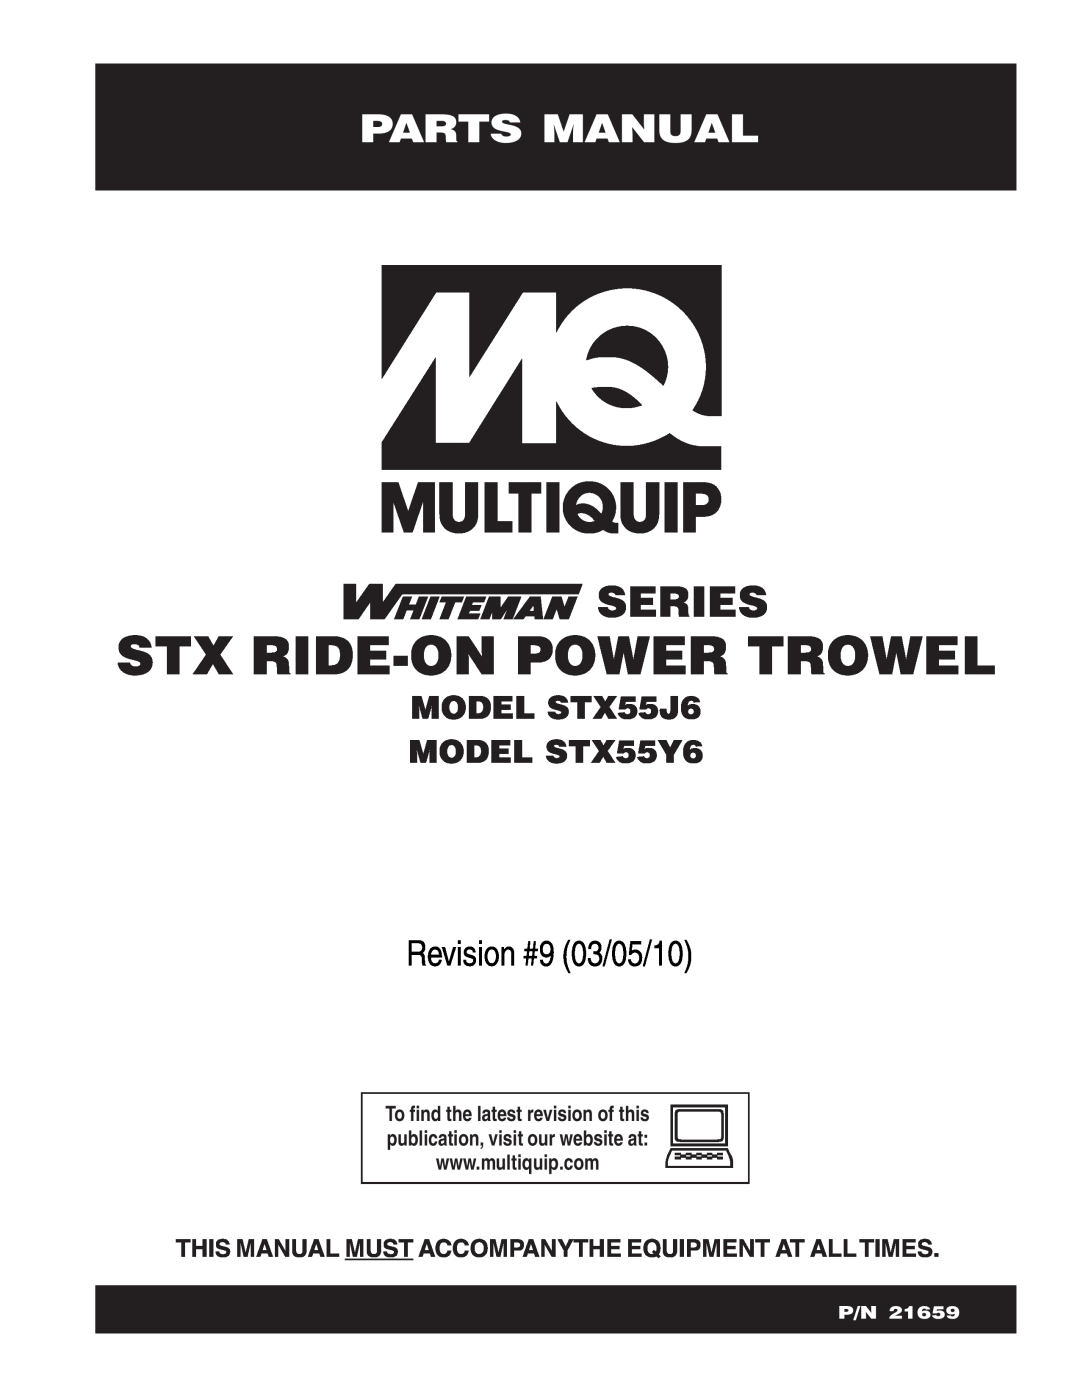 Multiquip manual Parts Manual, Stx Ride-On Power Trowel, Series, Revision #9 03/05/10, MODEL STX55J6 MODEL STX55Y6 